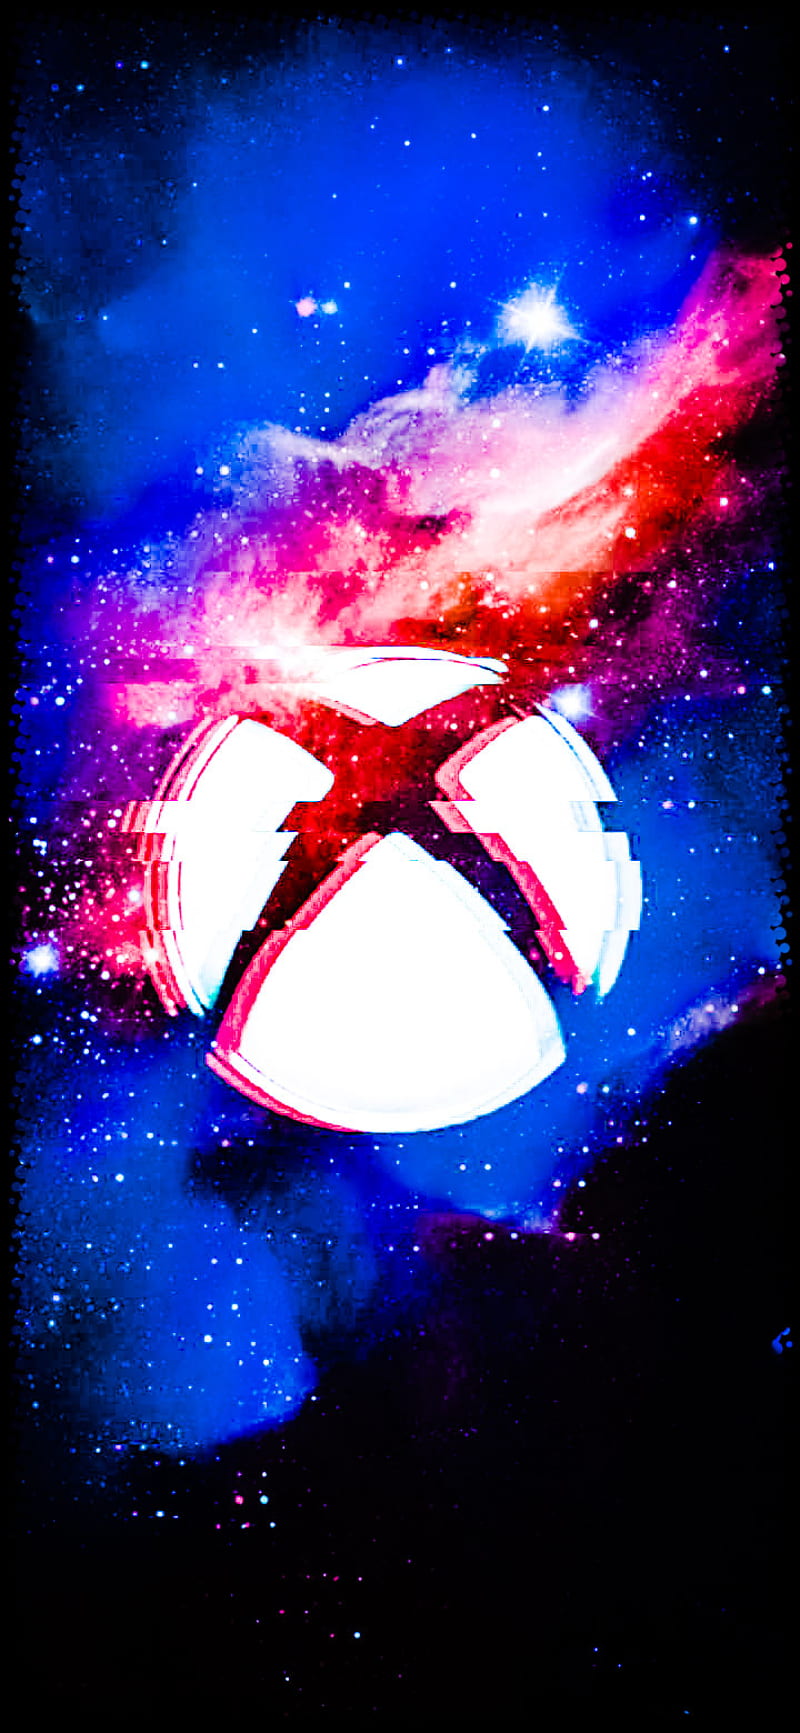 Reddit  xbox  Neon Xbox wallpaper 3840 x 2160  Xbox logo Best gaming  wallpapers Gaming wallpapers